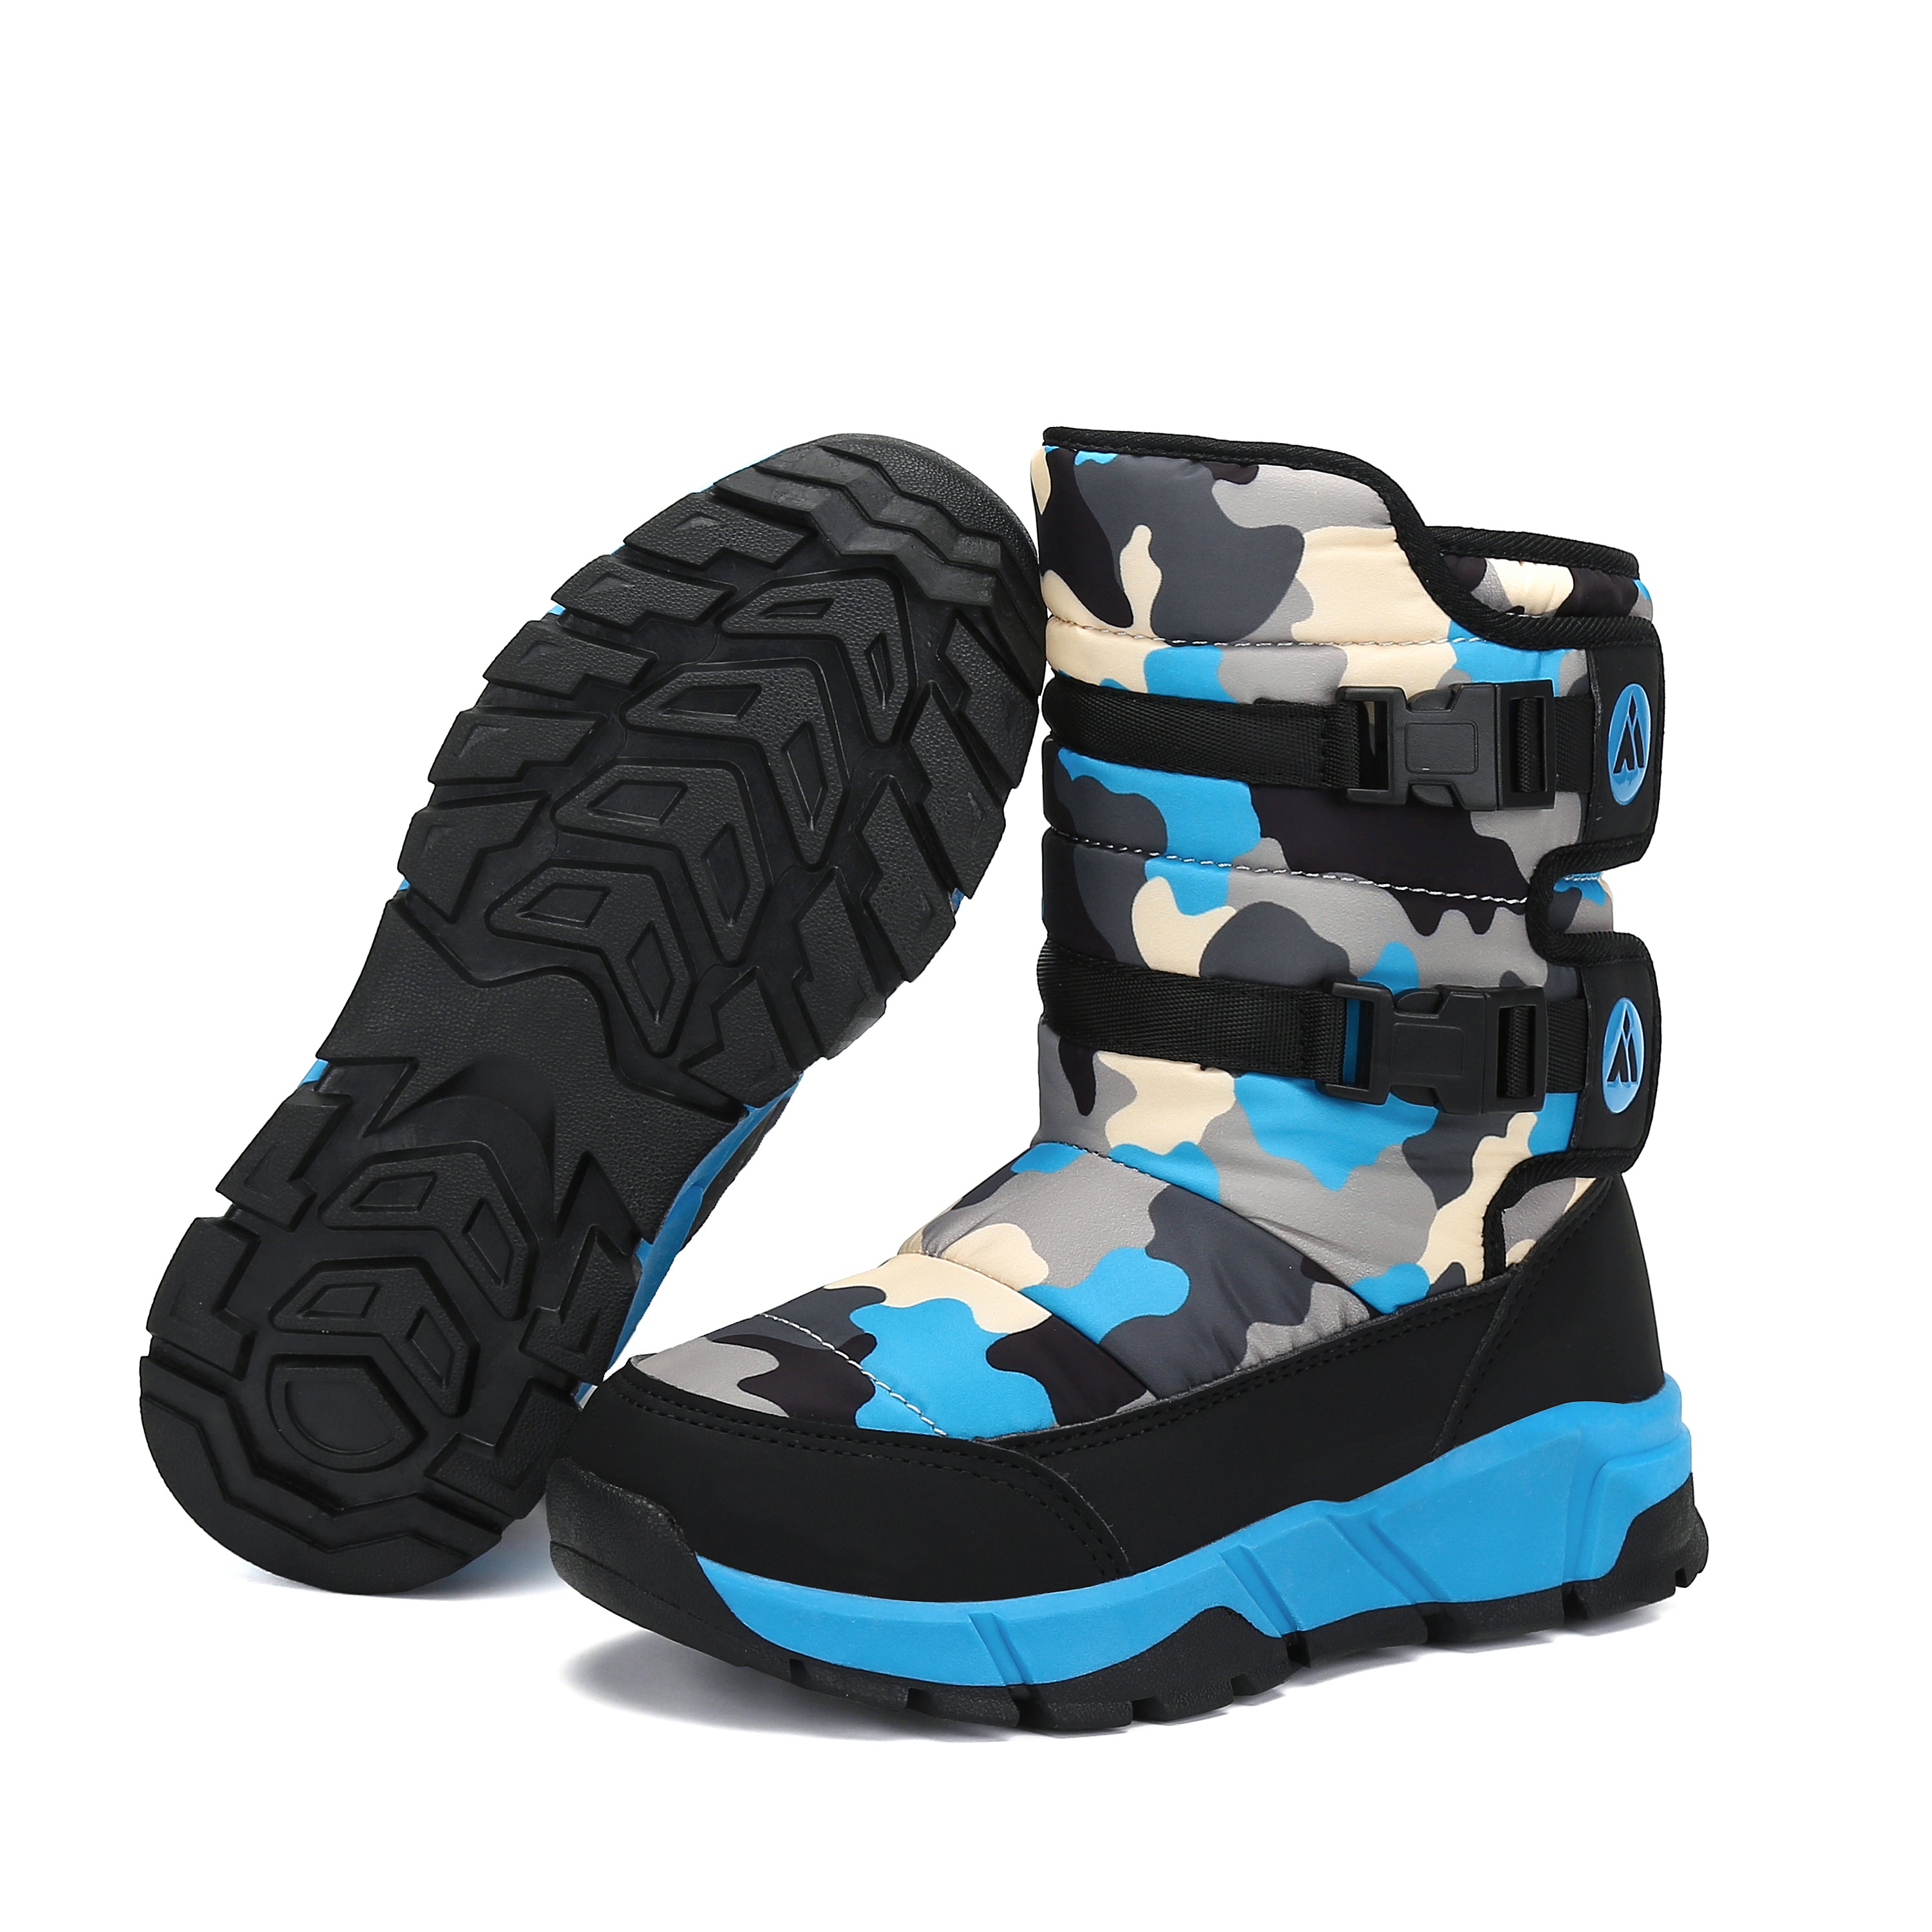 Girls Boys Toddler/Little Kid/Big Kid Winter Snow Boots Warm Waterproof for Outdoor Skiing